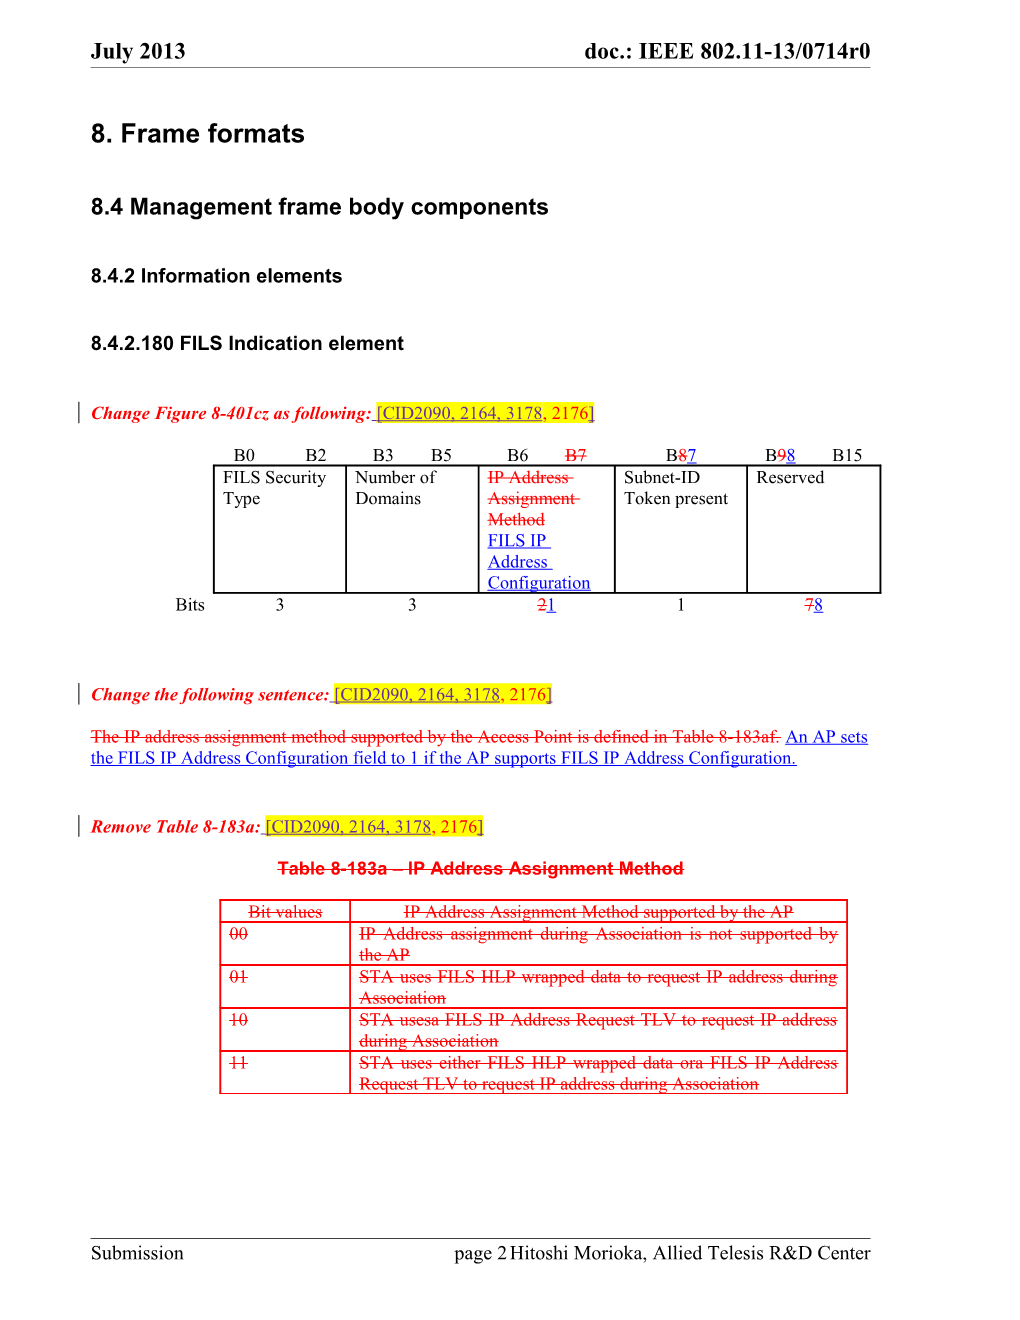 8.4 Management Frame Body Components